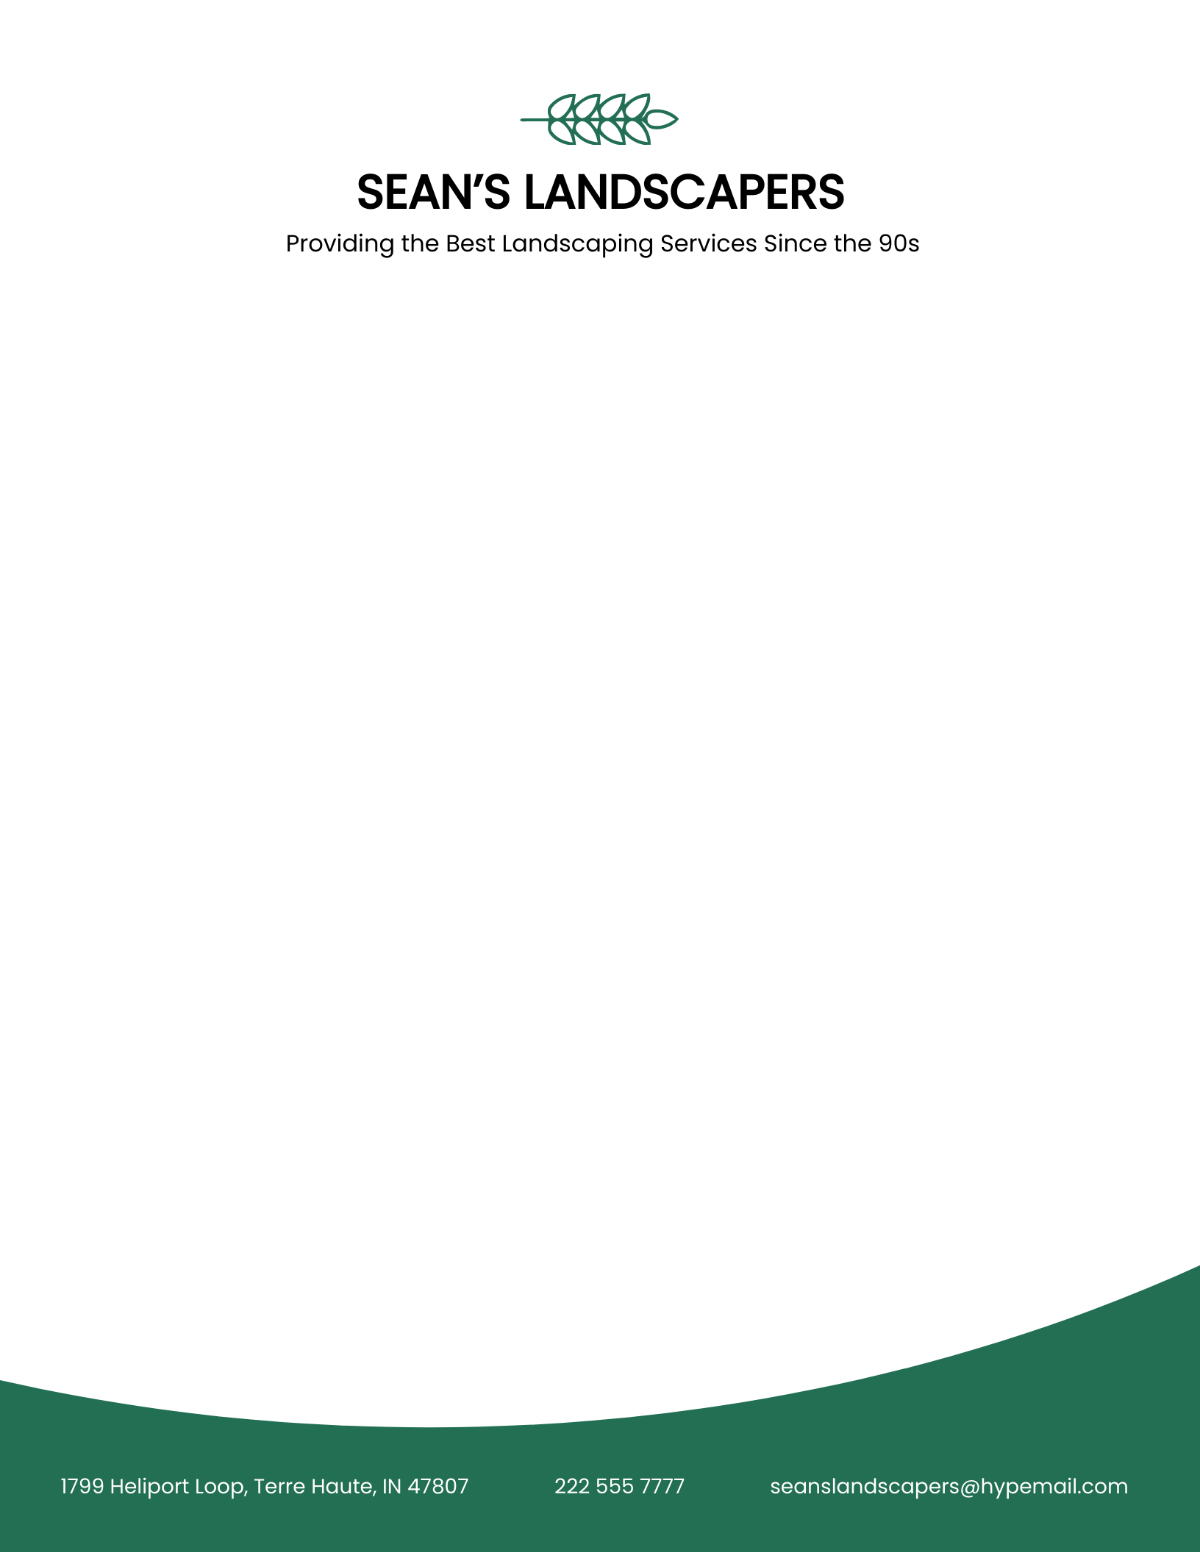 Sample Landscaping Service Letterhead Template